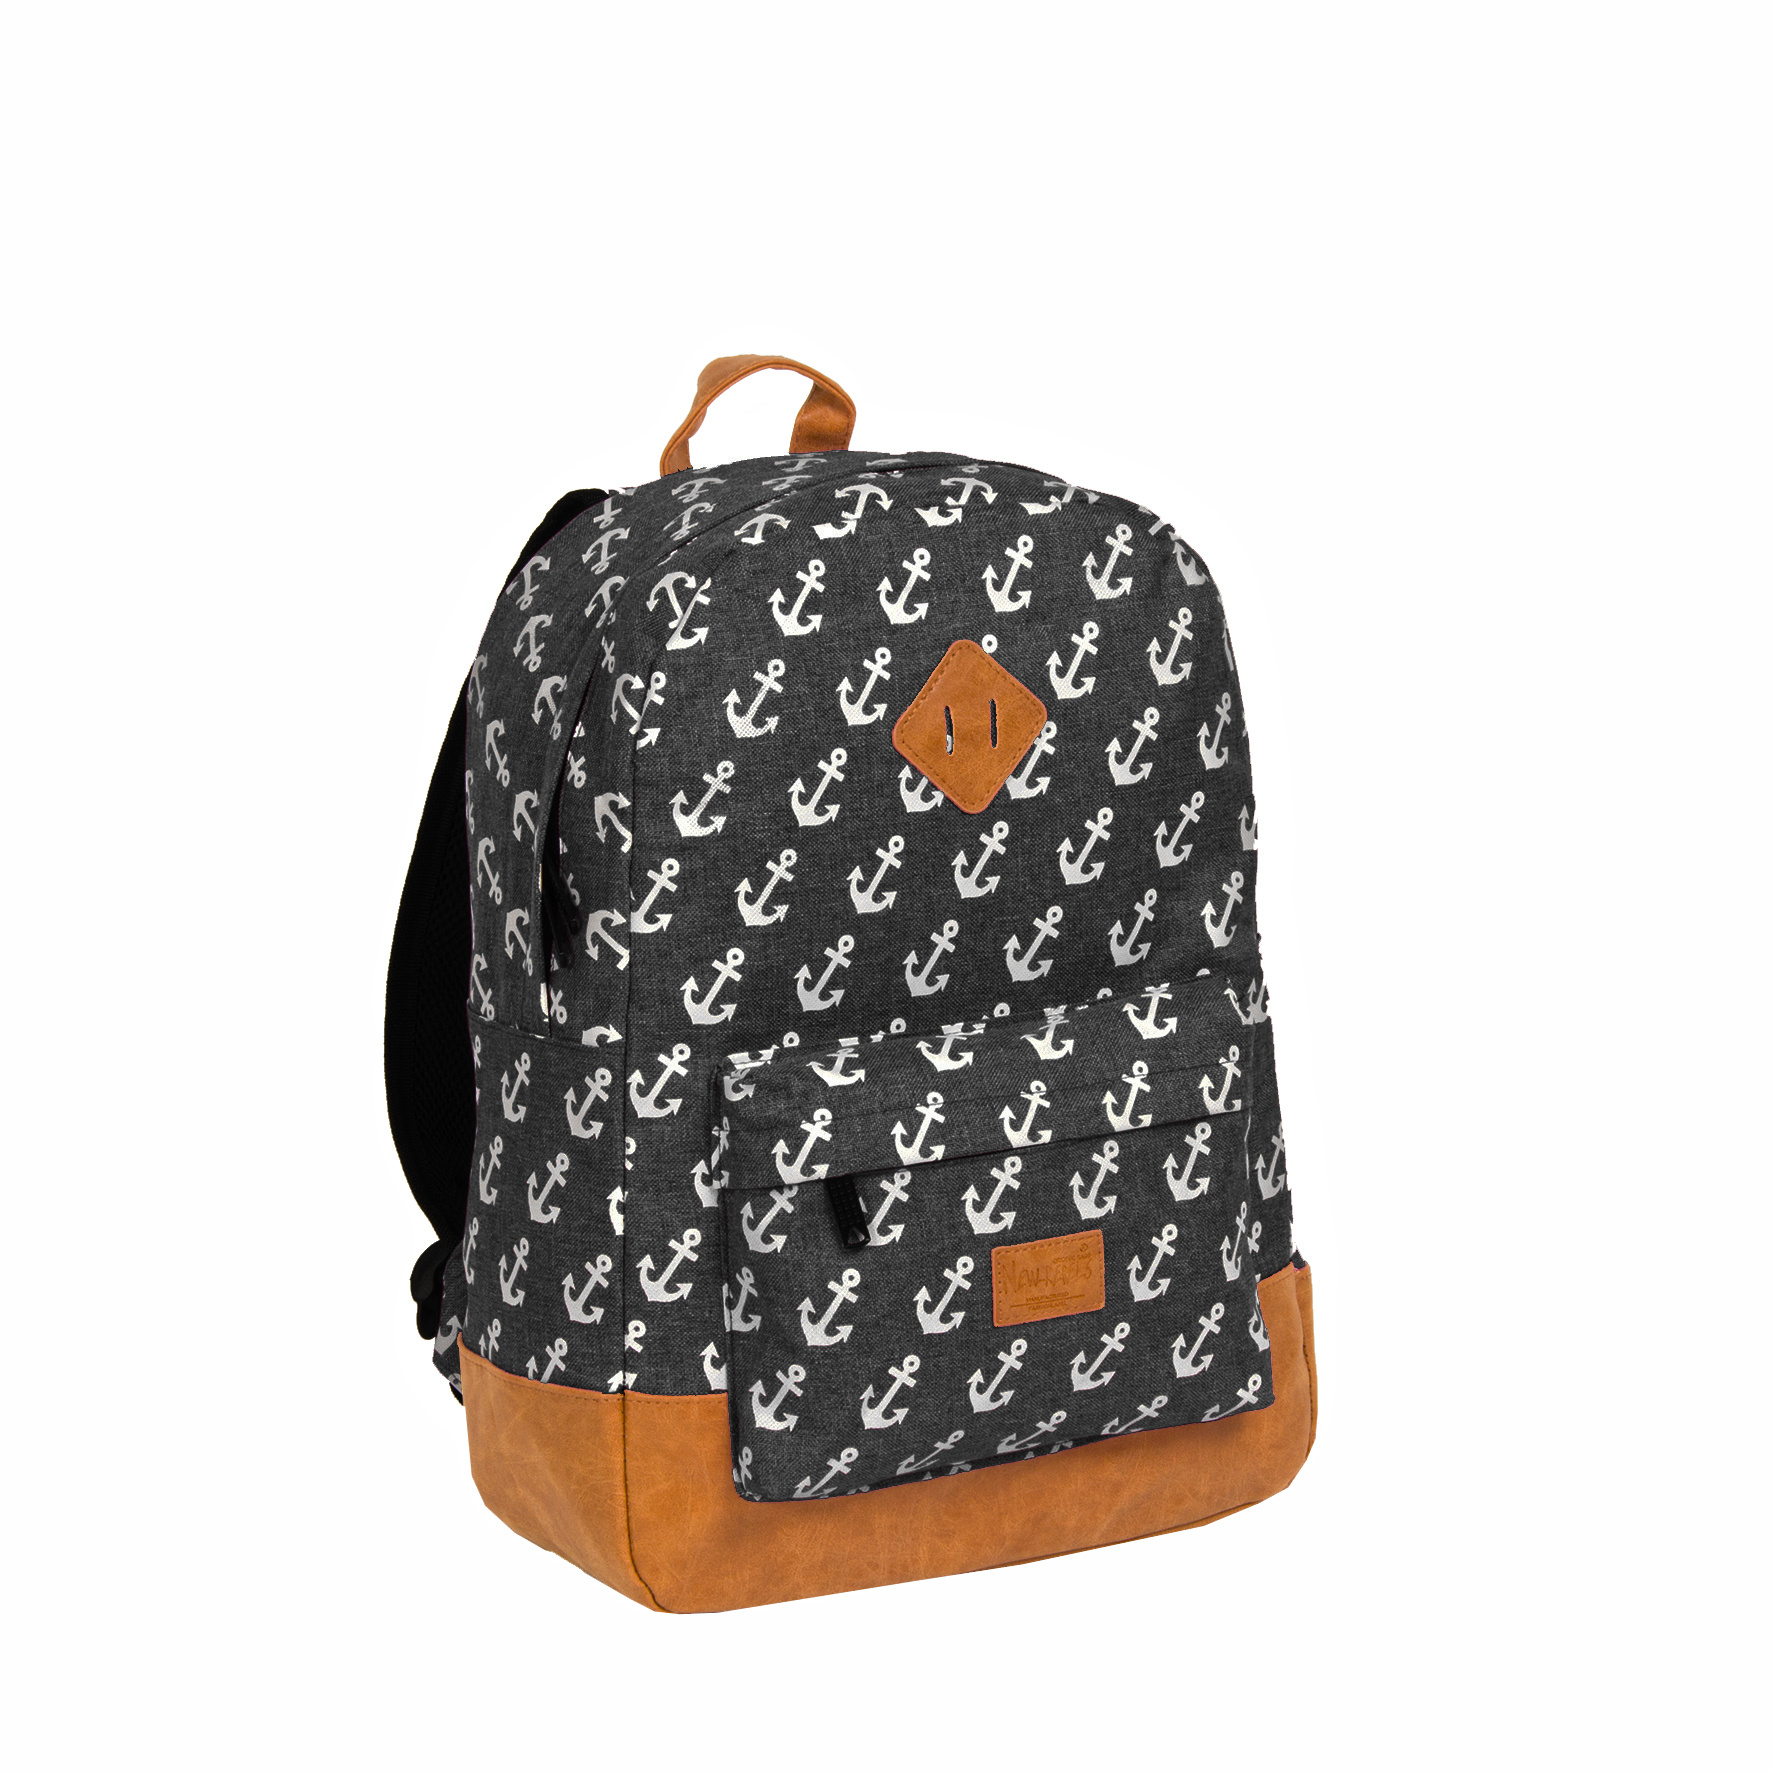 George Stevenson pad Feest New-Rebels® Sealife backpack Black - New Rebels